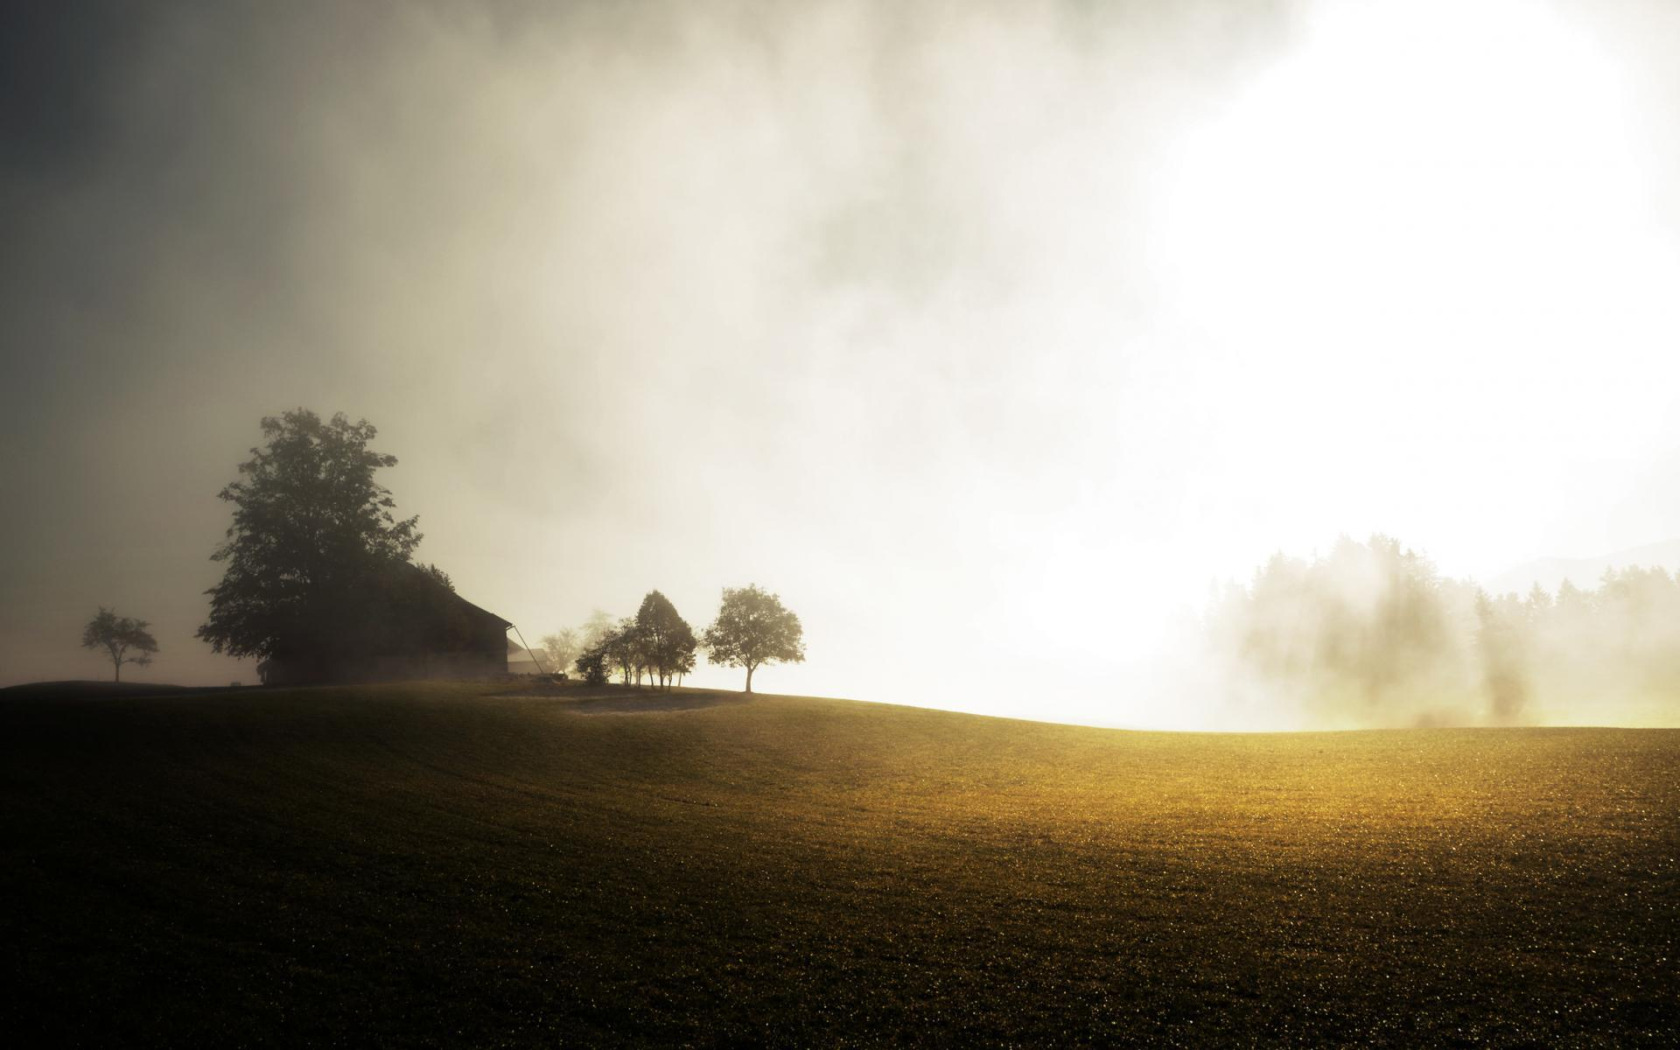 Вышло солнце из тумана. Пейзаж туман. Поле дом туман. Поле в тумане. Туманное утро в поле.